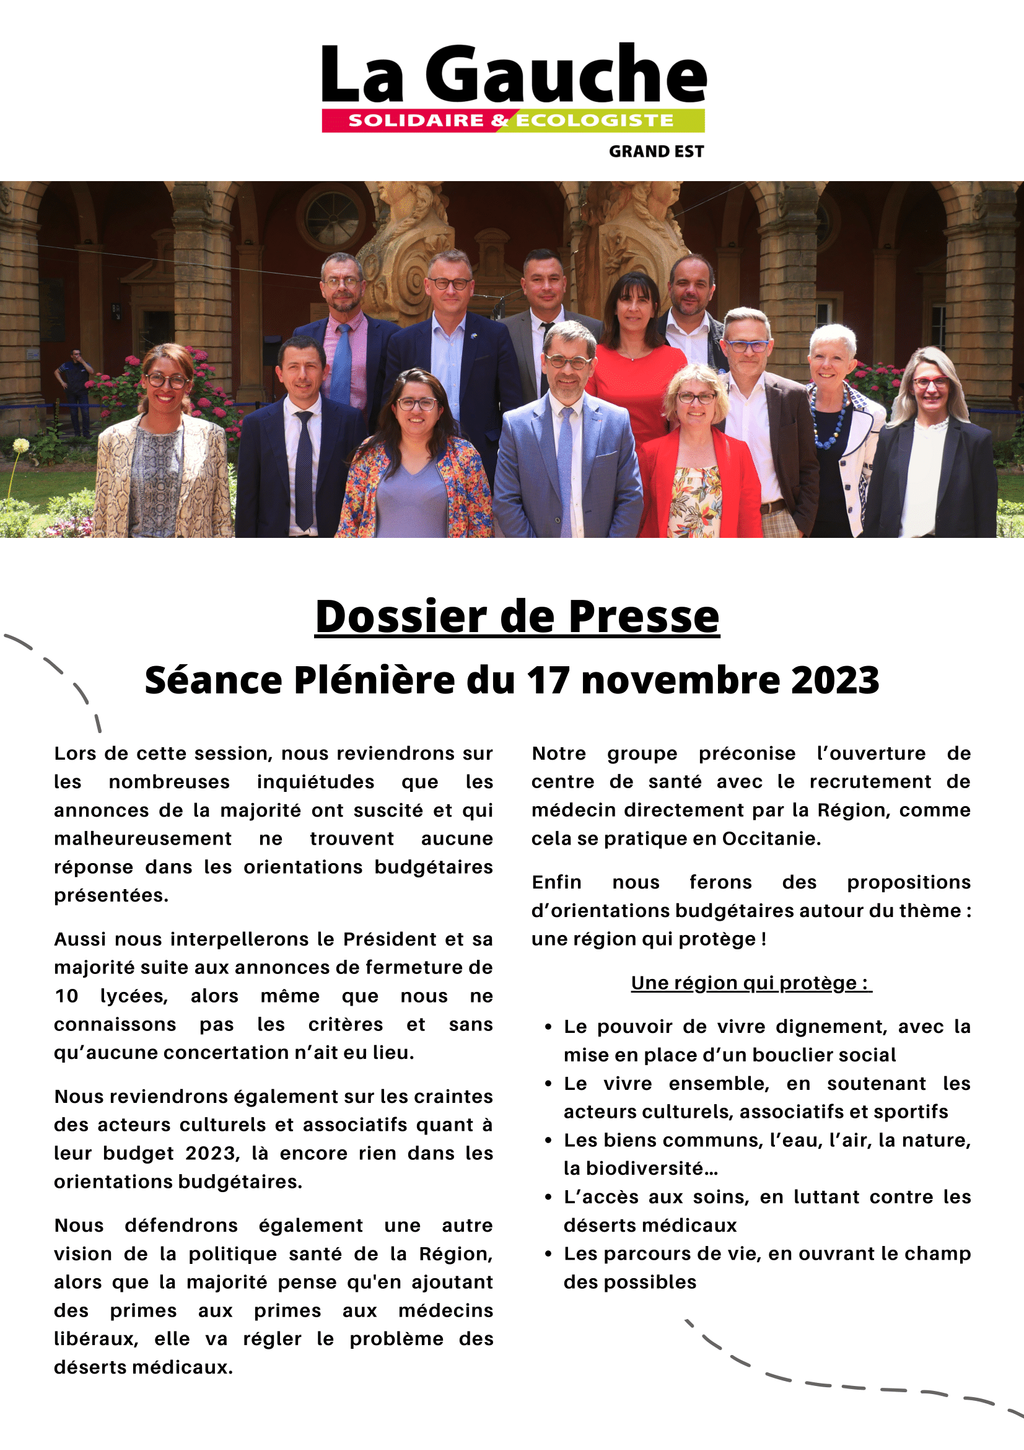 Dossier-de-presse-DOB-2023-2-1